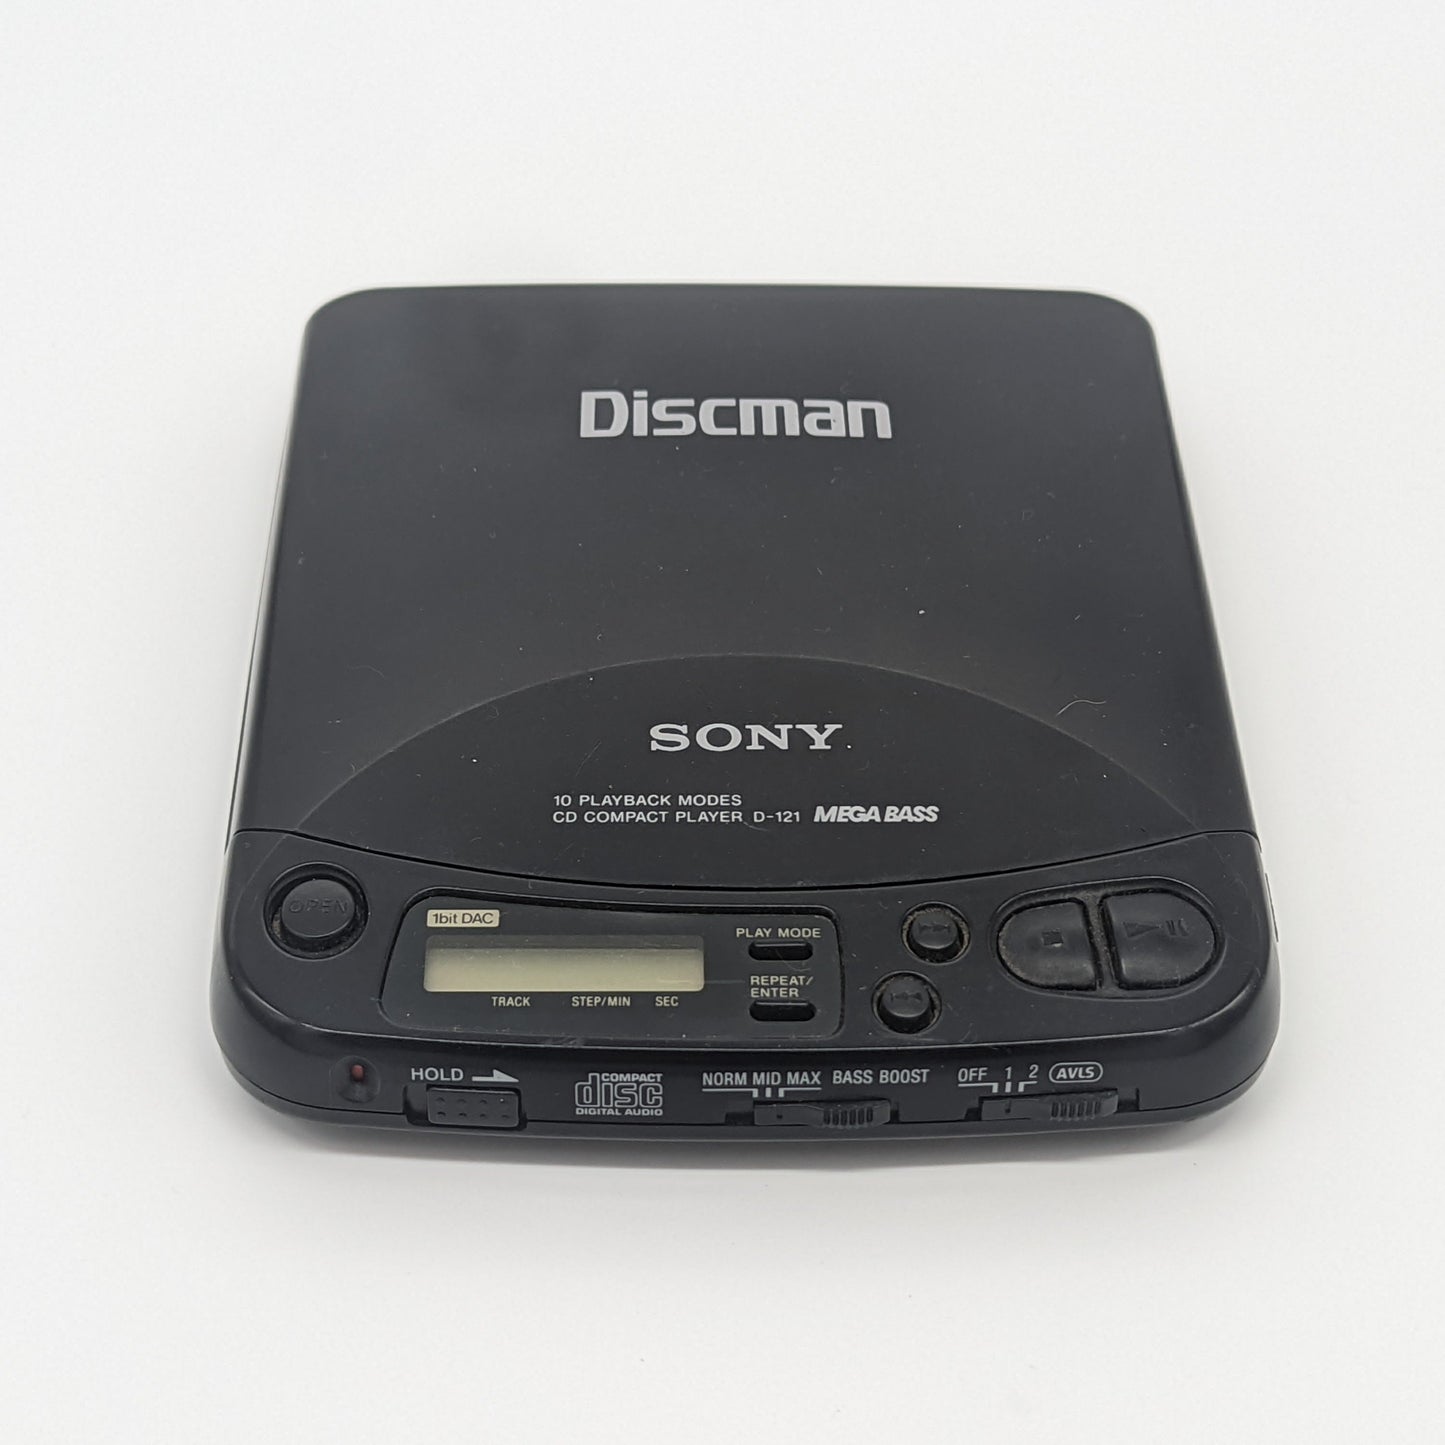 Sony Discman Line (1984-2000)